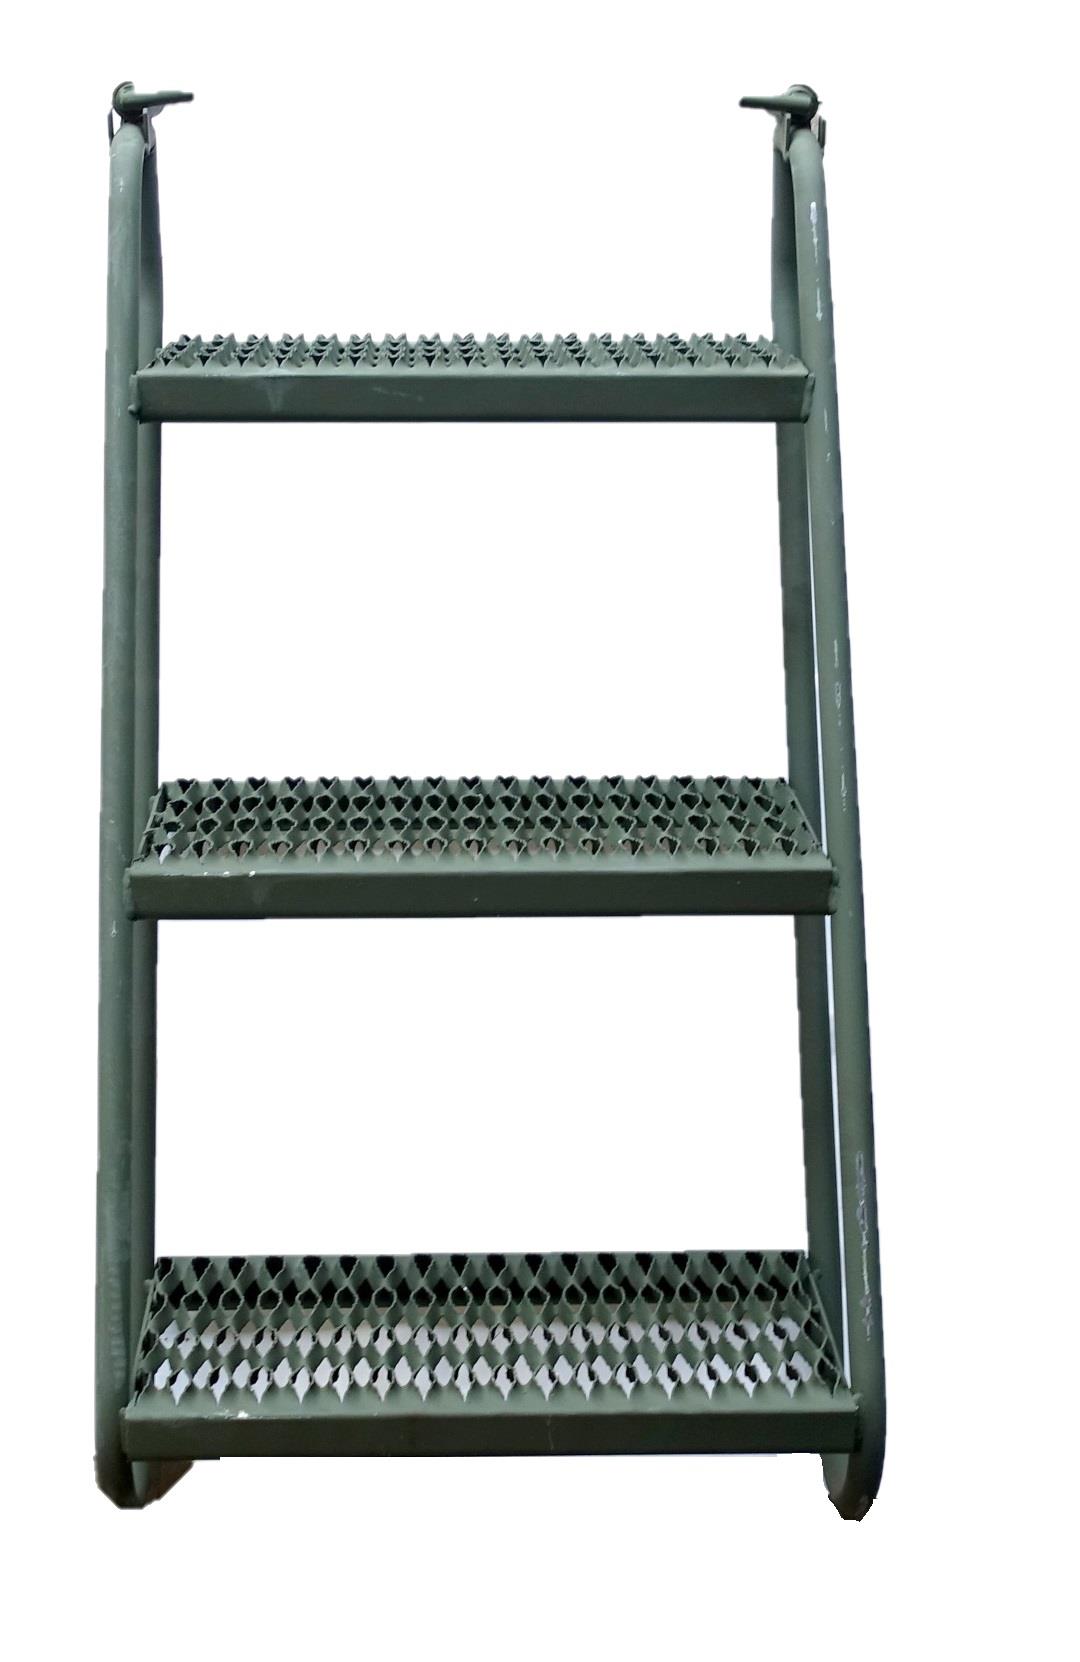 ALL-5136 | ALL-5136 3-Step Boarding Ladder (1) (Large).JPG